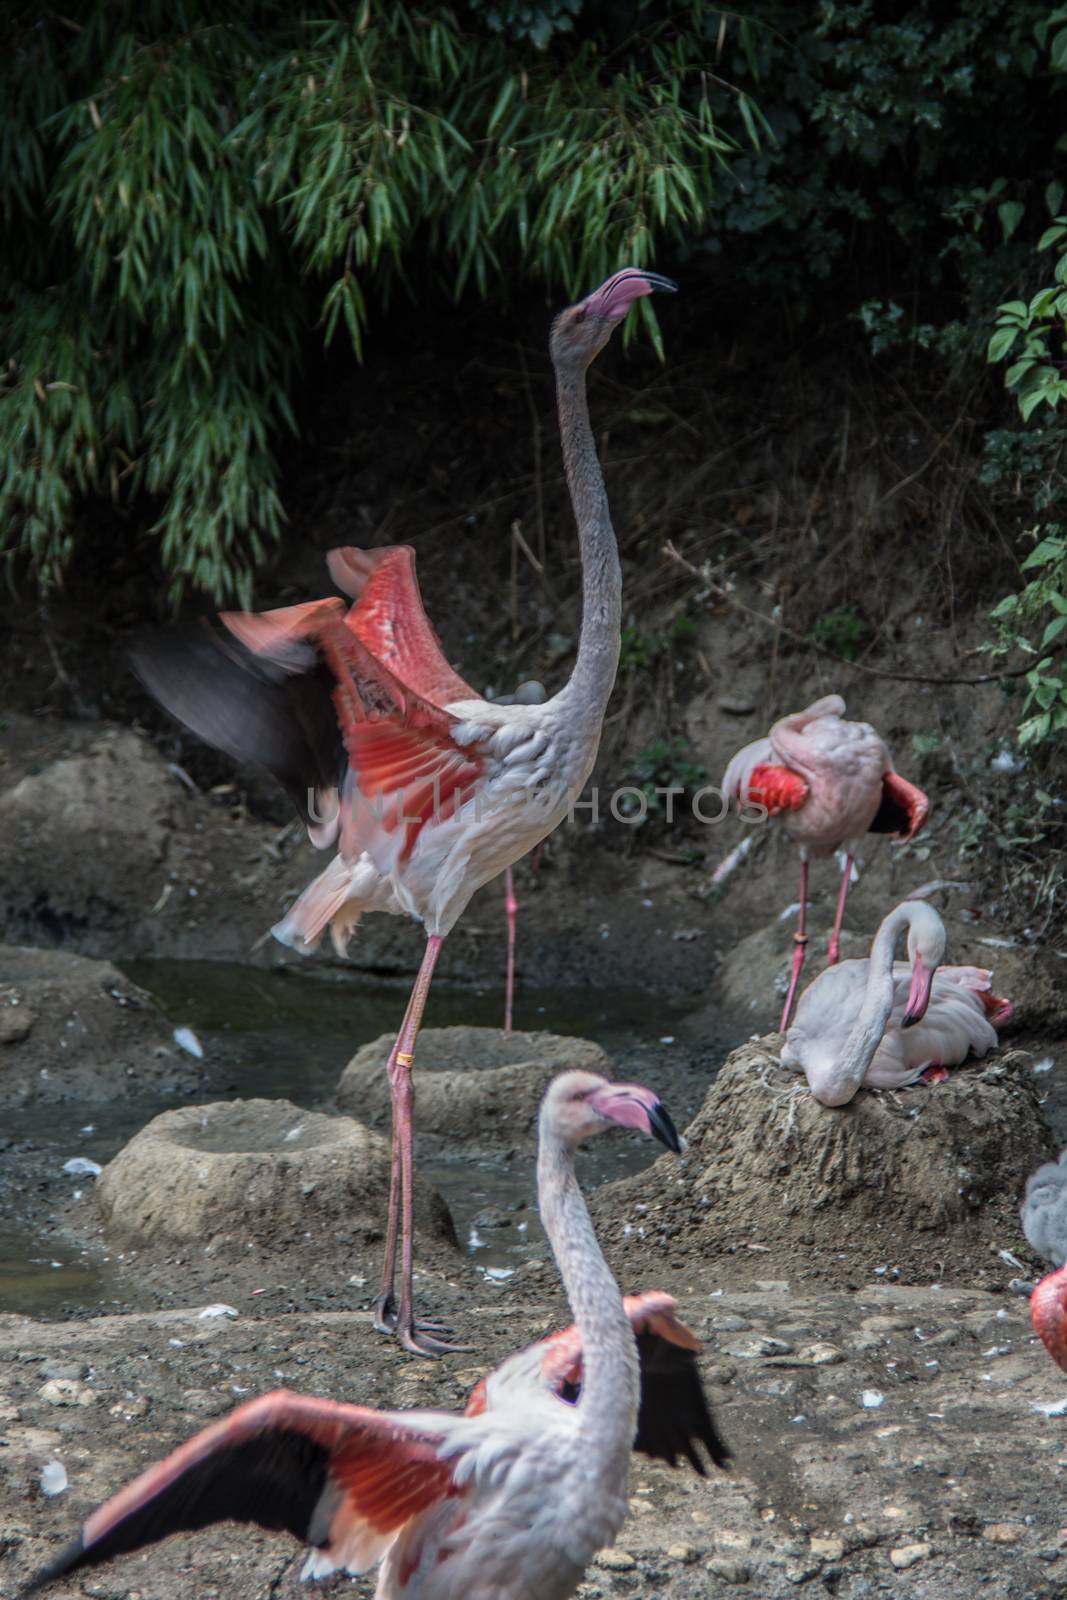 Flamingos with long legs strut around